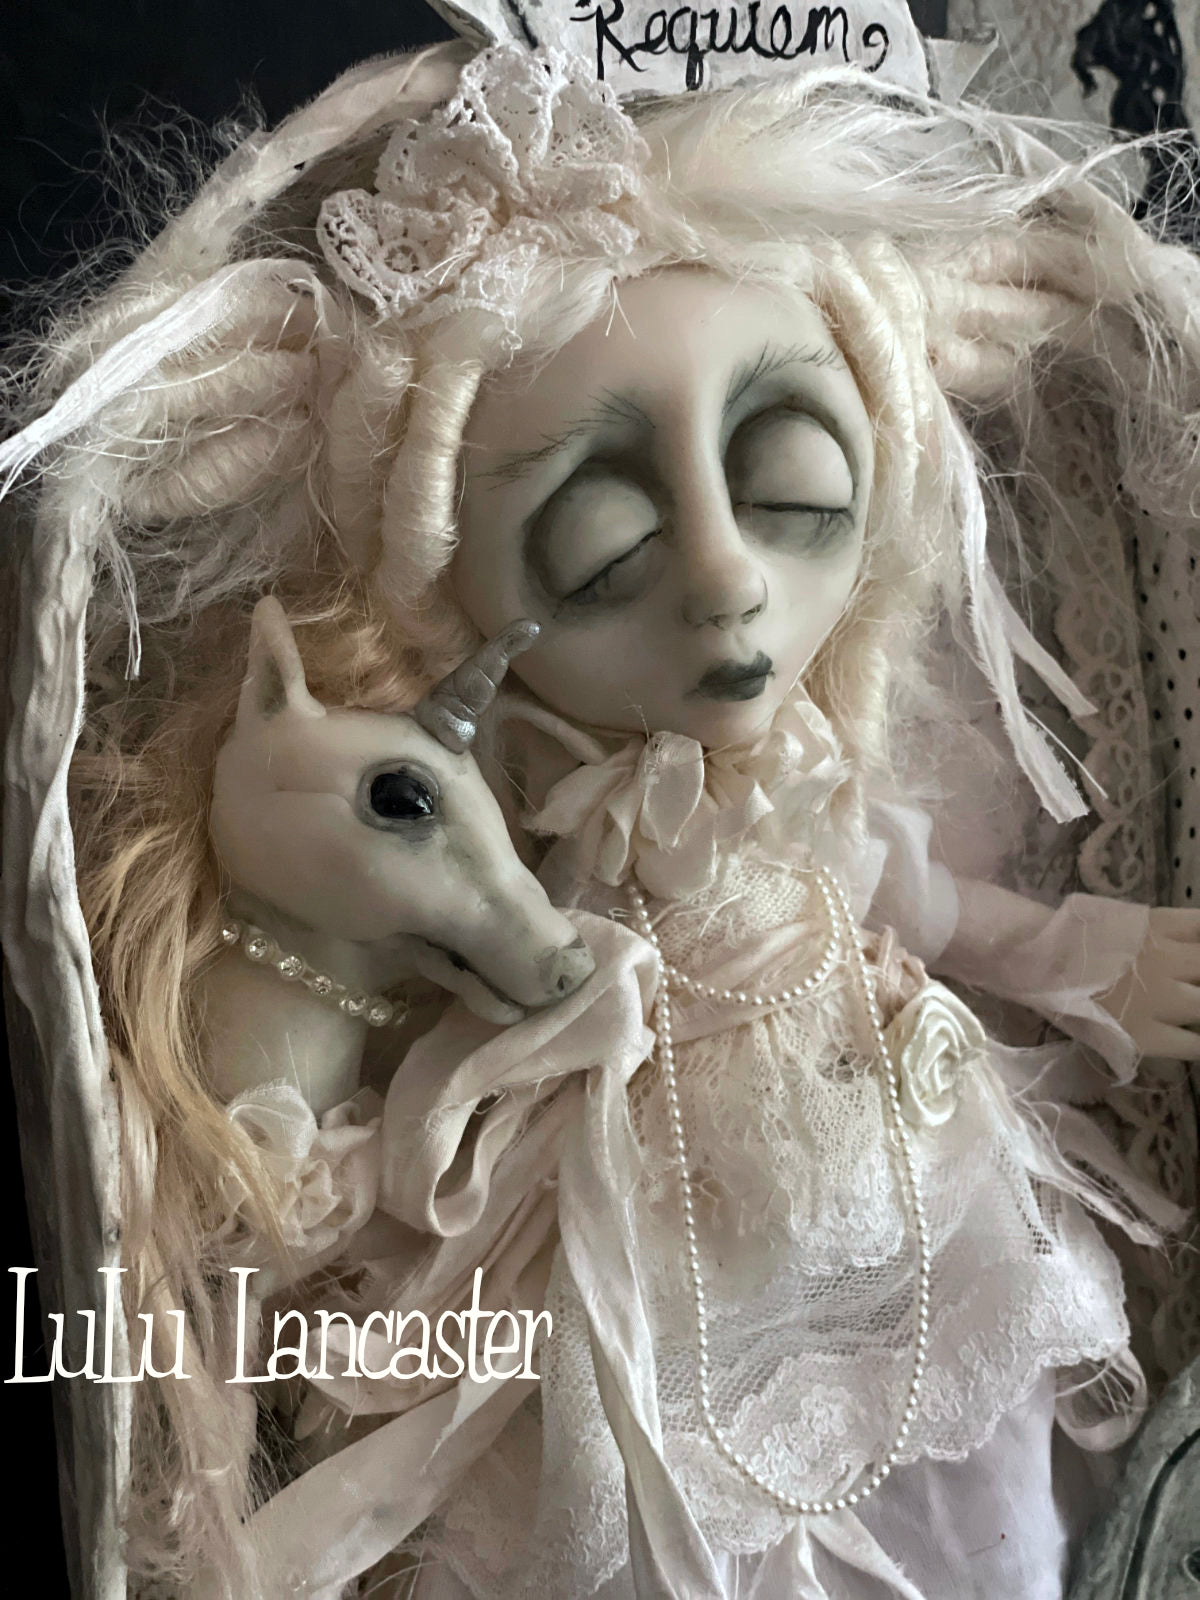 Requiem for the Lost One Sleeping Ghostie Original LuLu Lancaster Halloween Art Doll